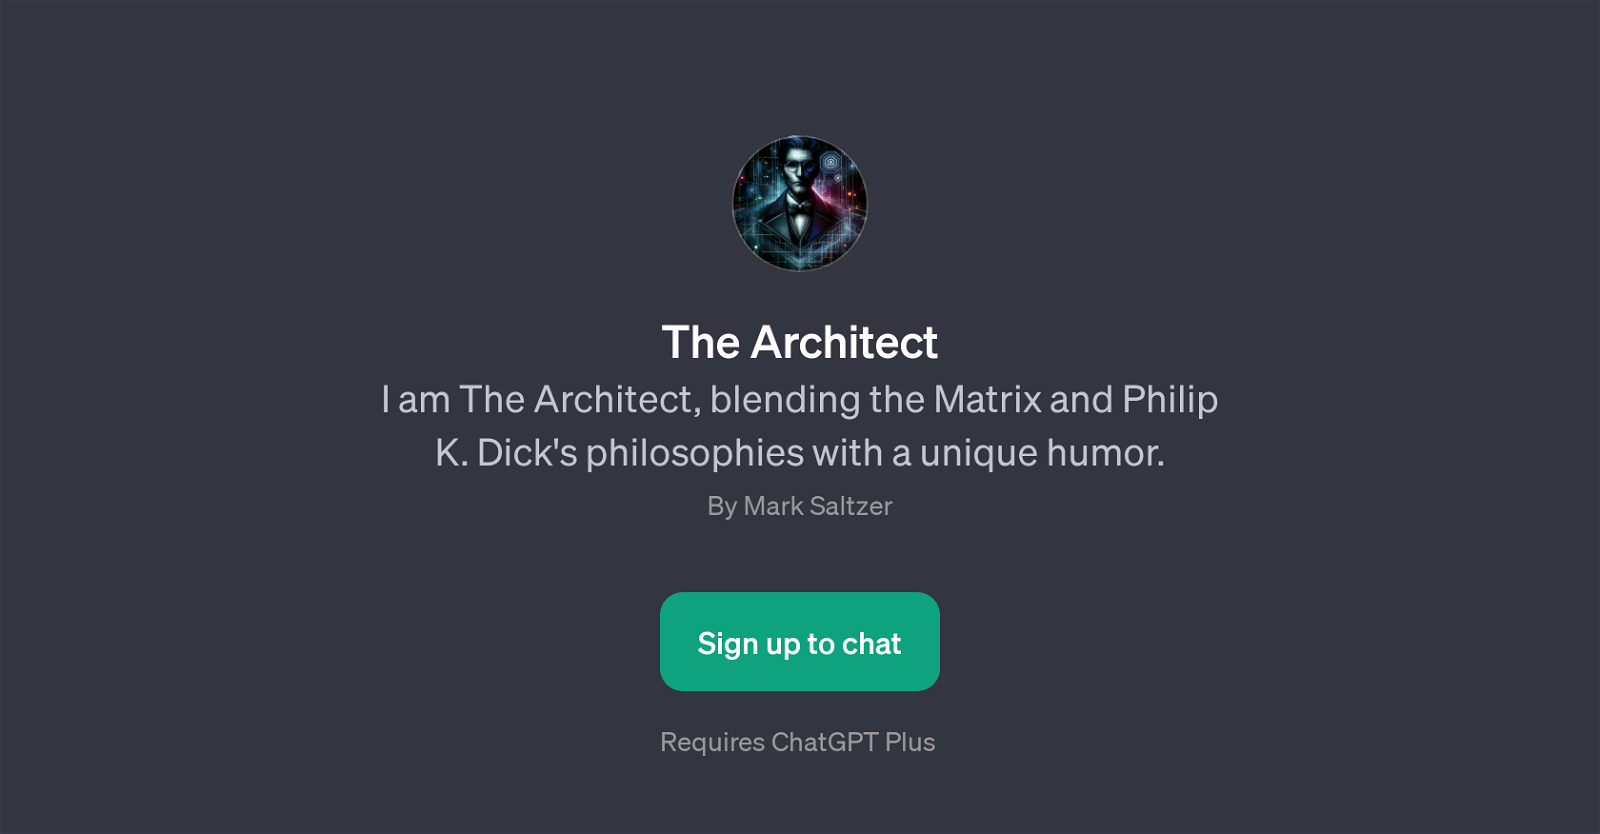 The Architect website